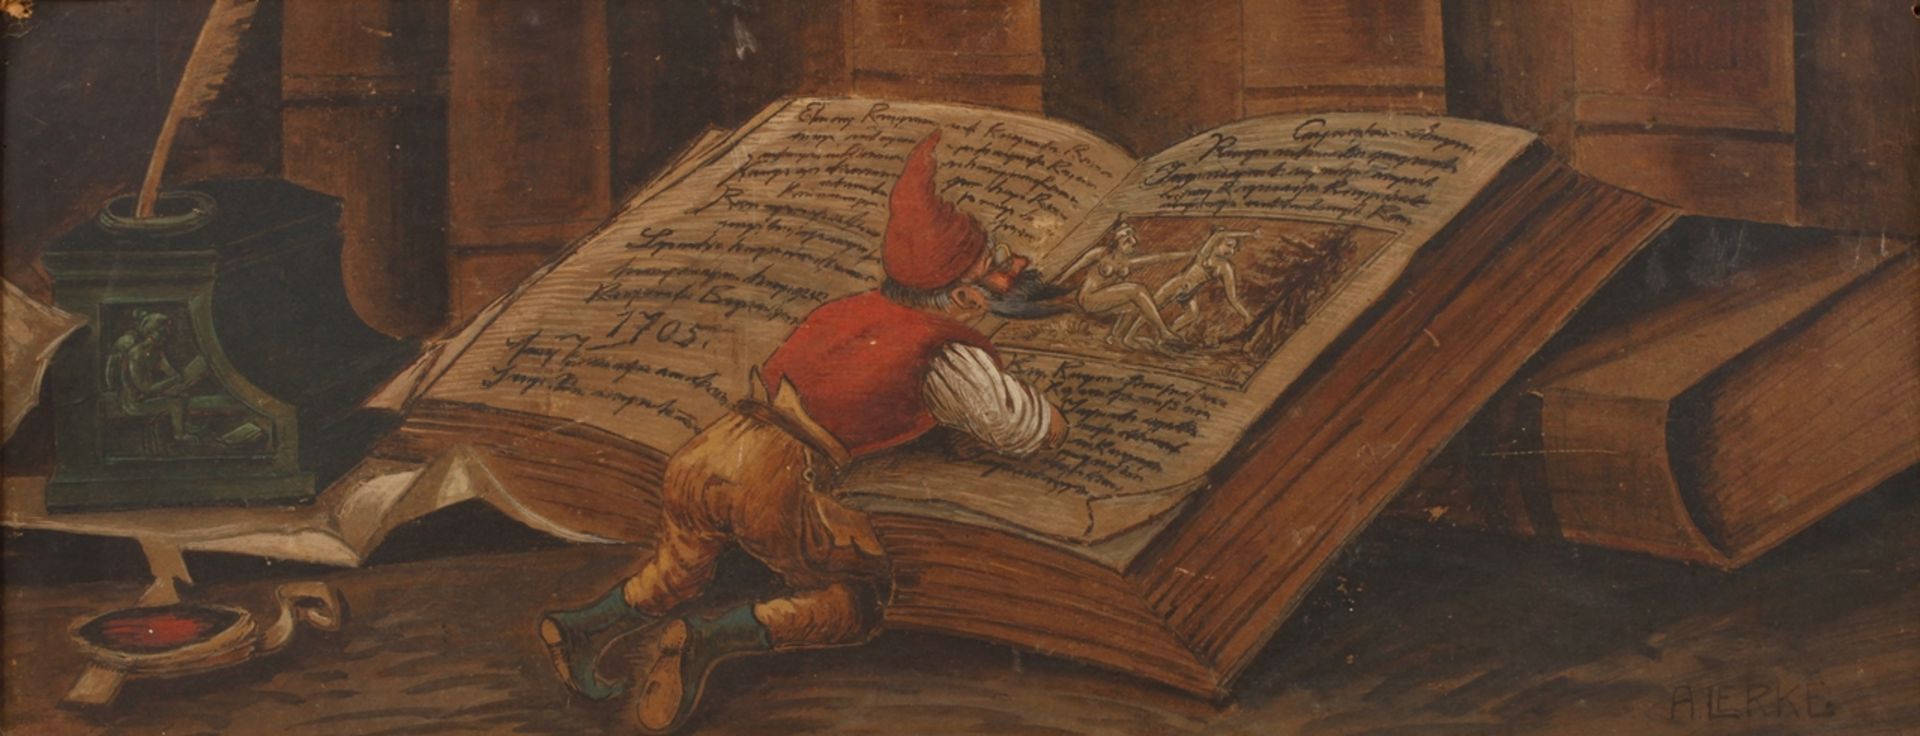 A. Lerke, Dwarf reading